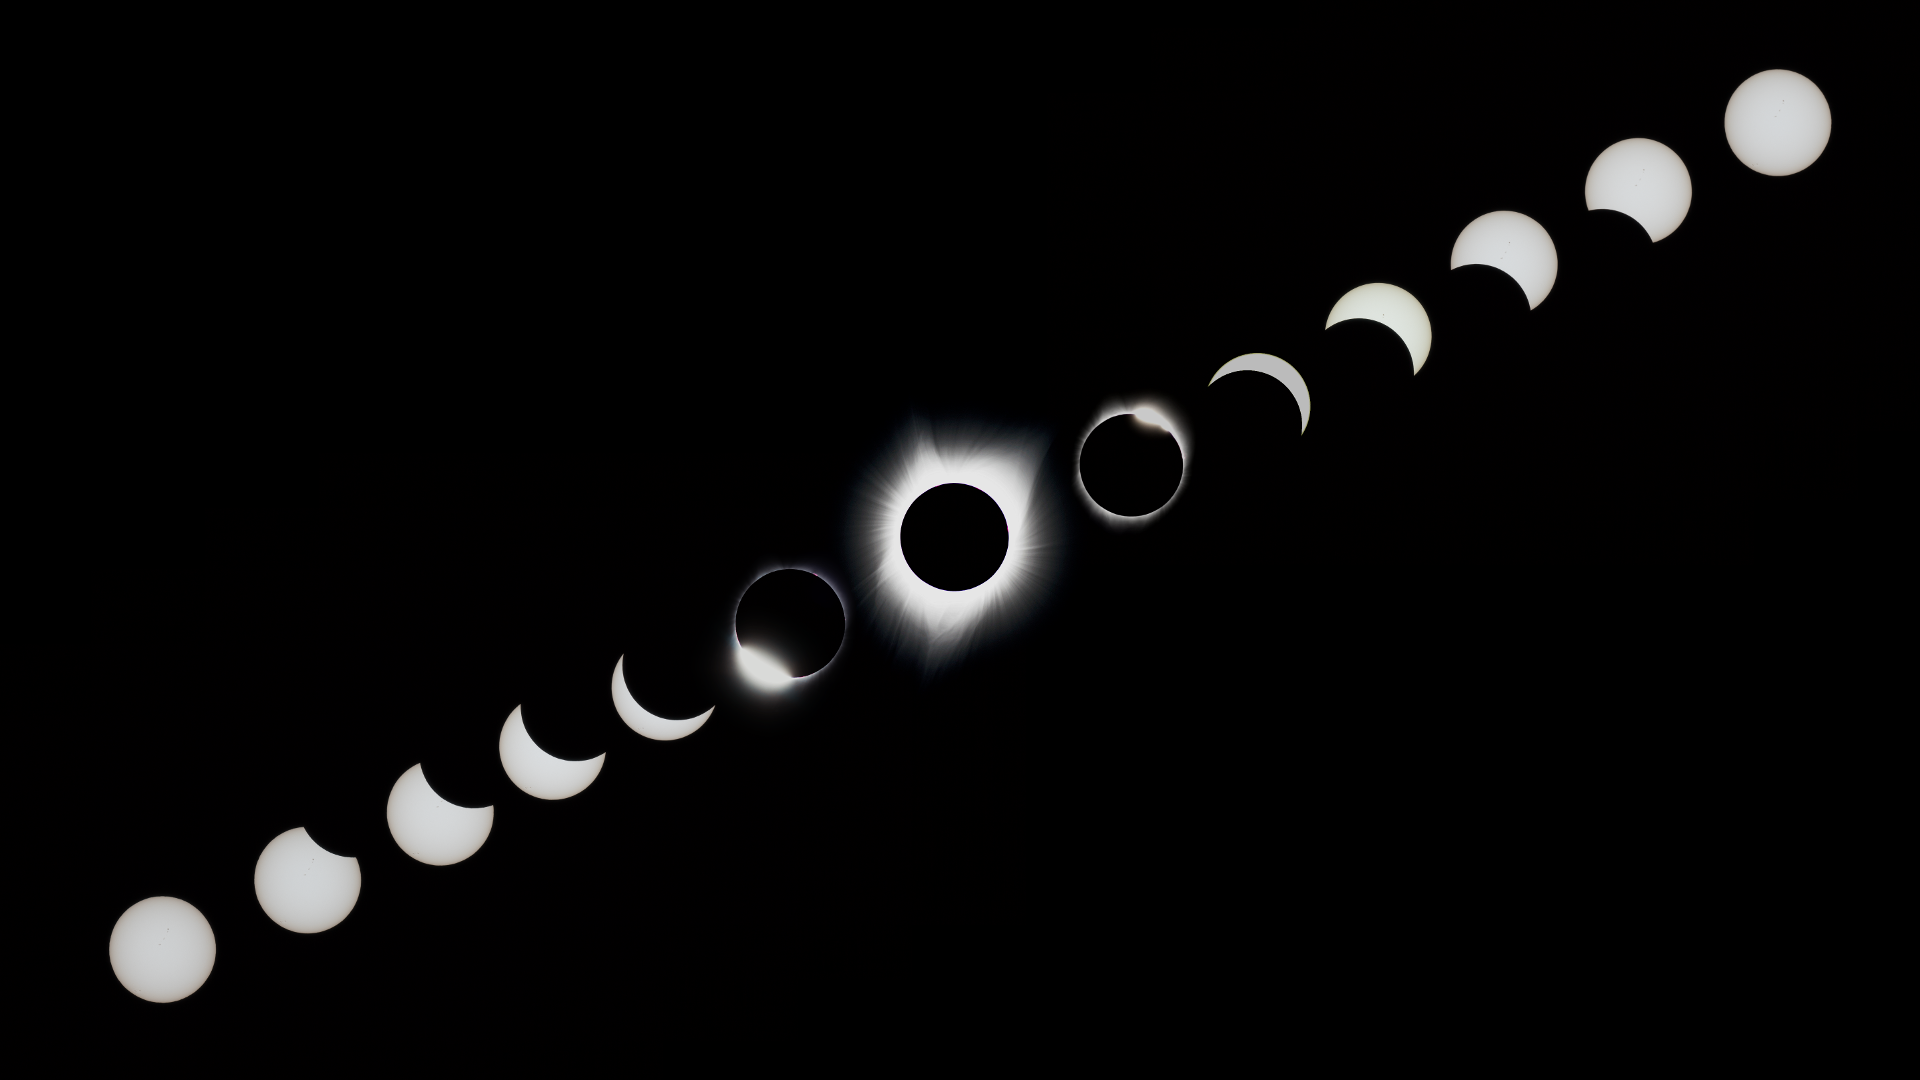 http://www.shakemid.com/pub/total_solar_eclipse_wall2_1920.png